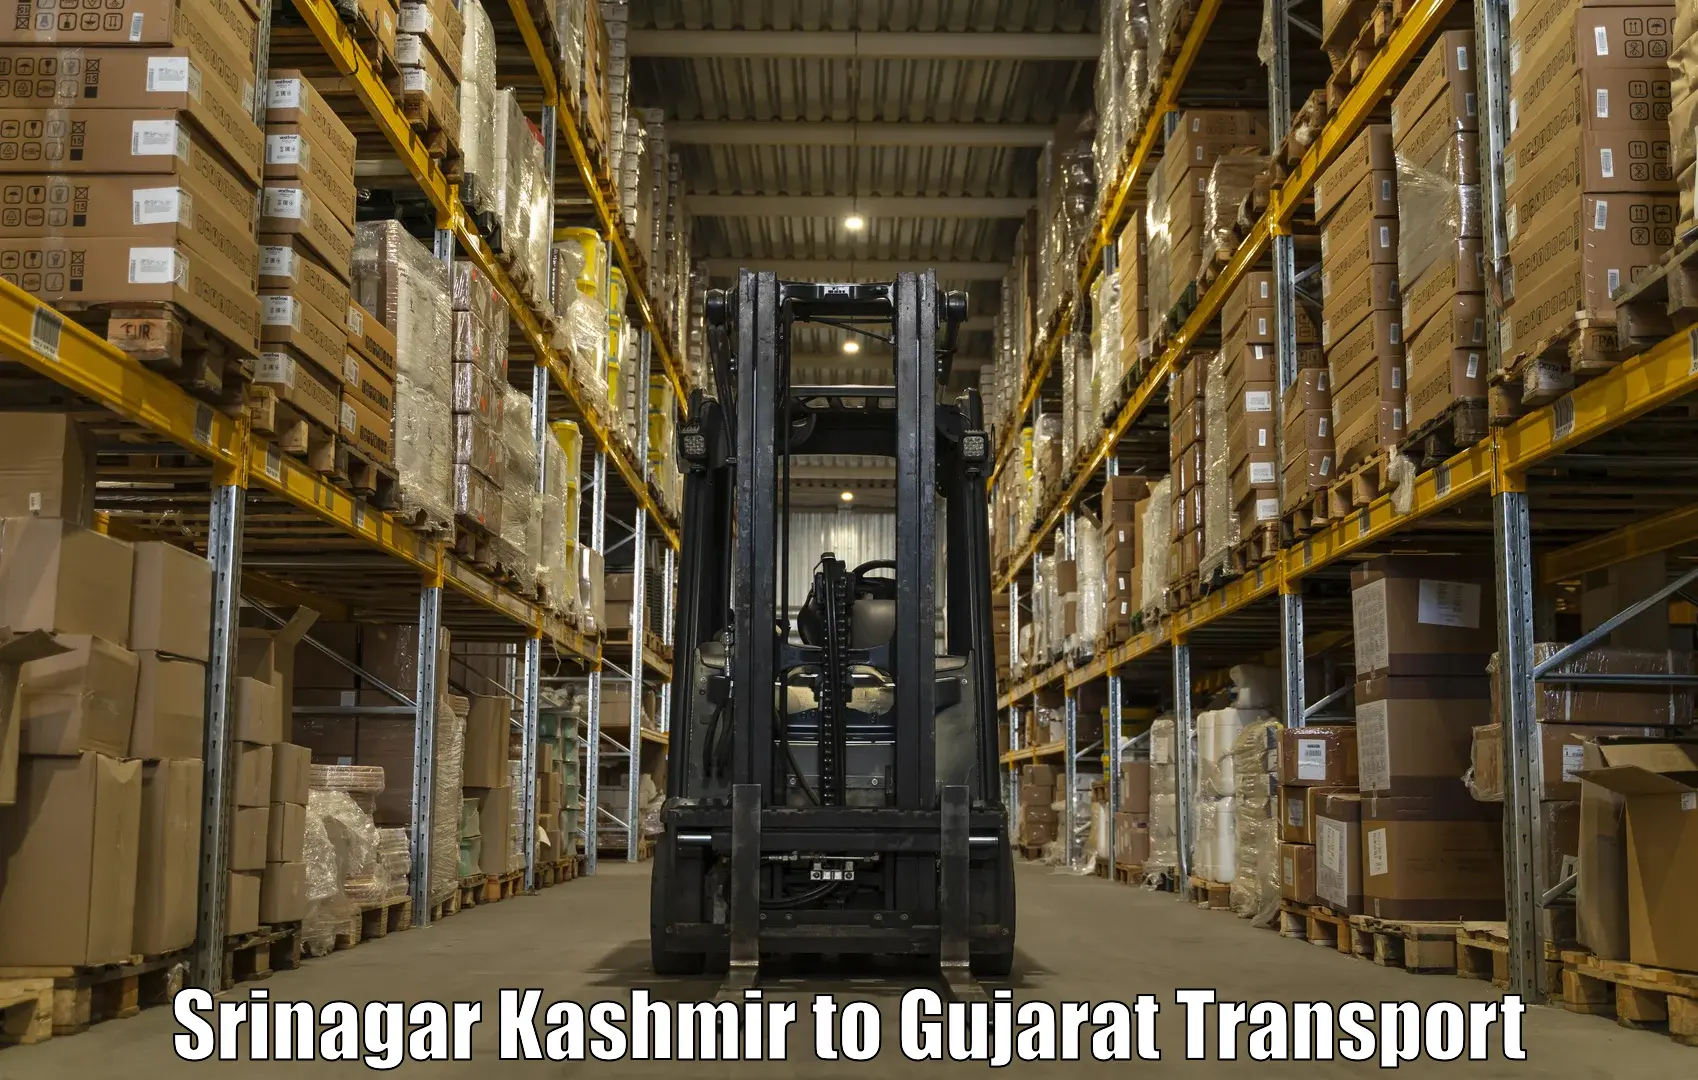 Goods delivery service Srinagar Kashmir to Rajkot